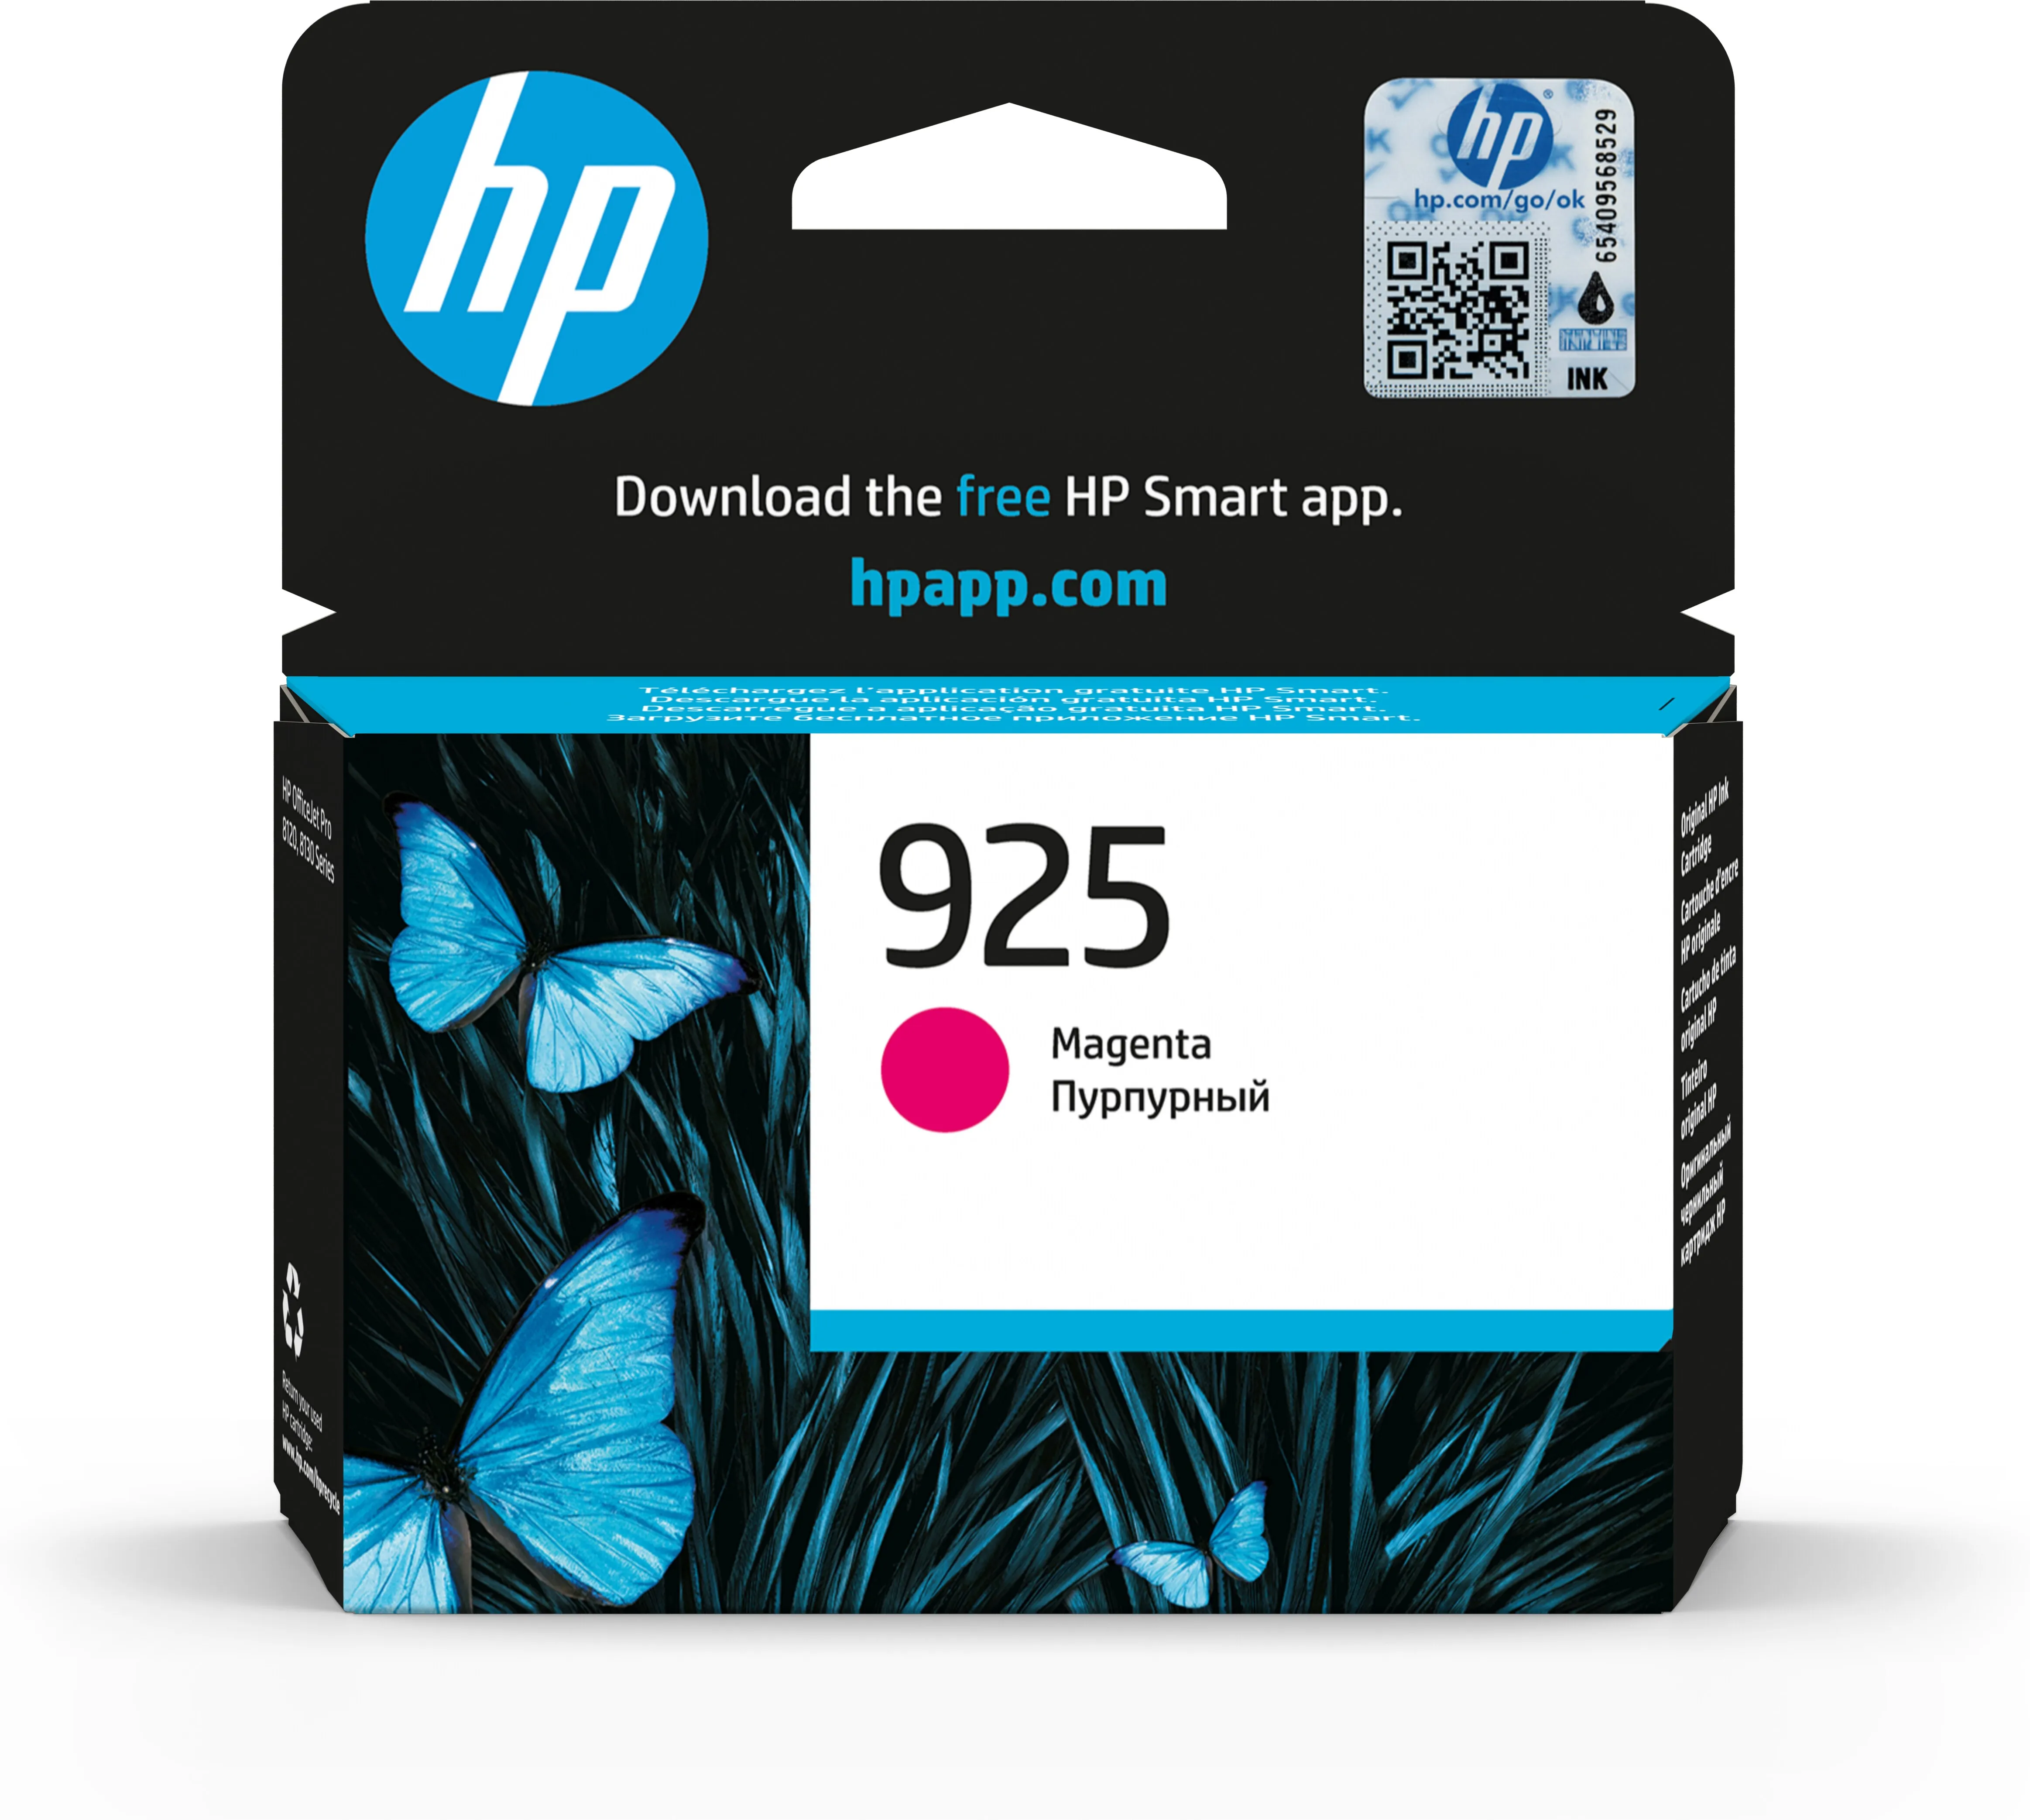 Vente HP 925 Magenta Original Ink Cartridge au meilleur prix